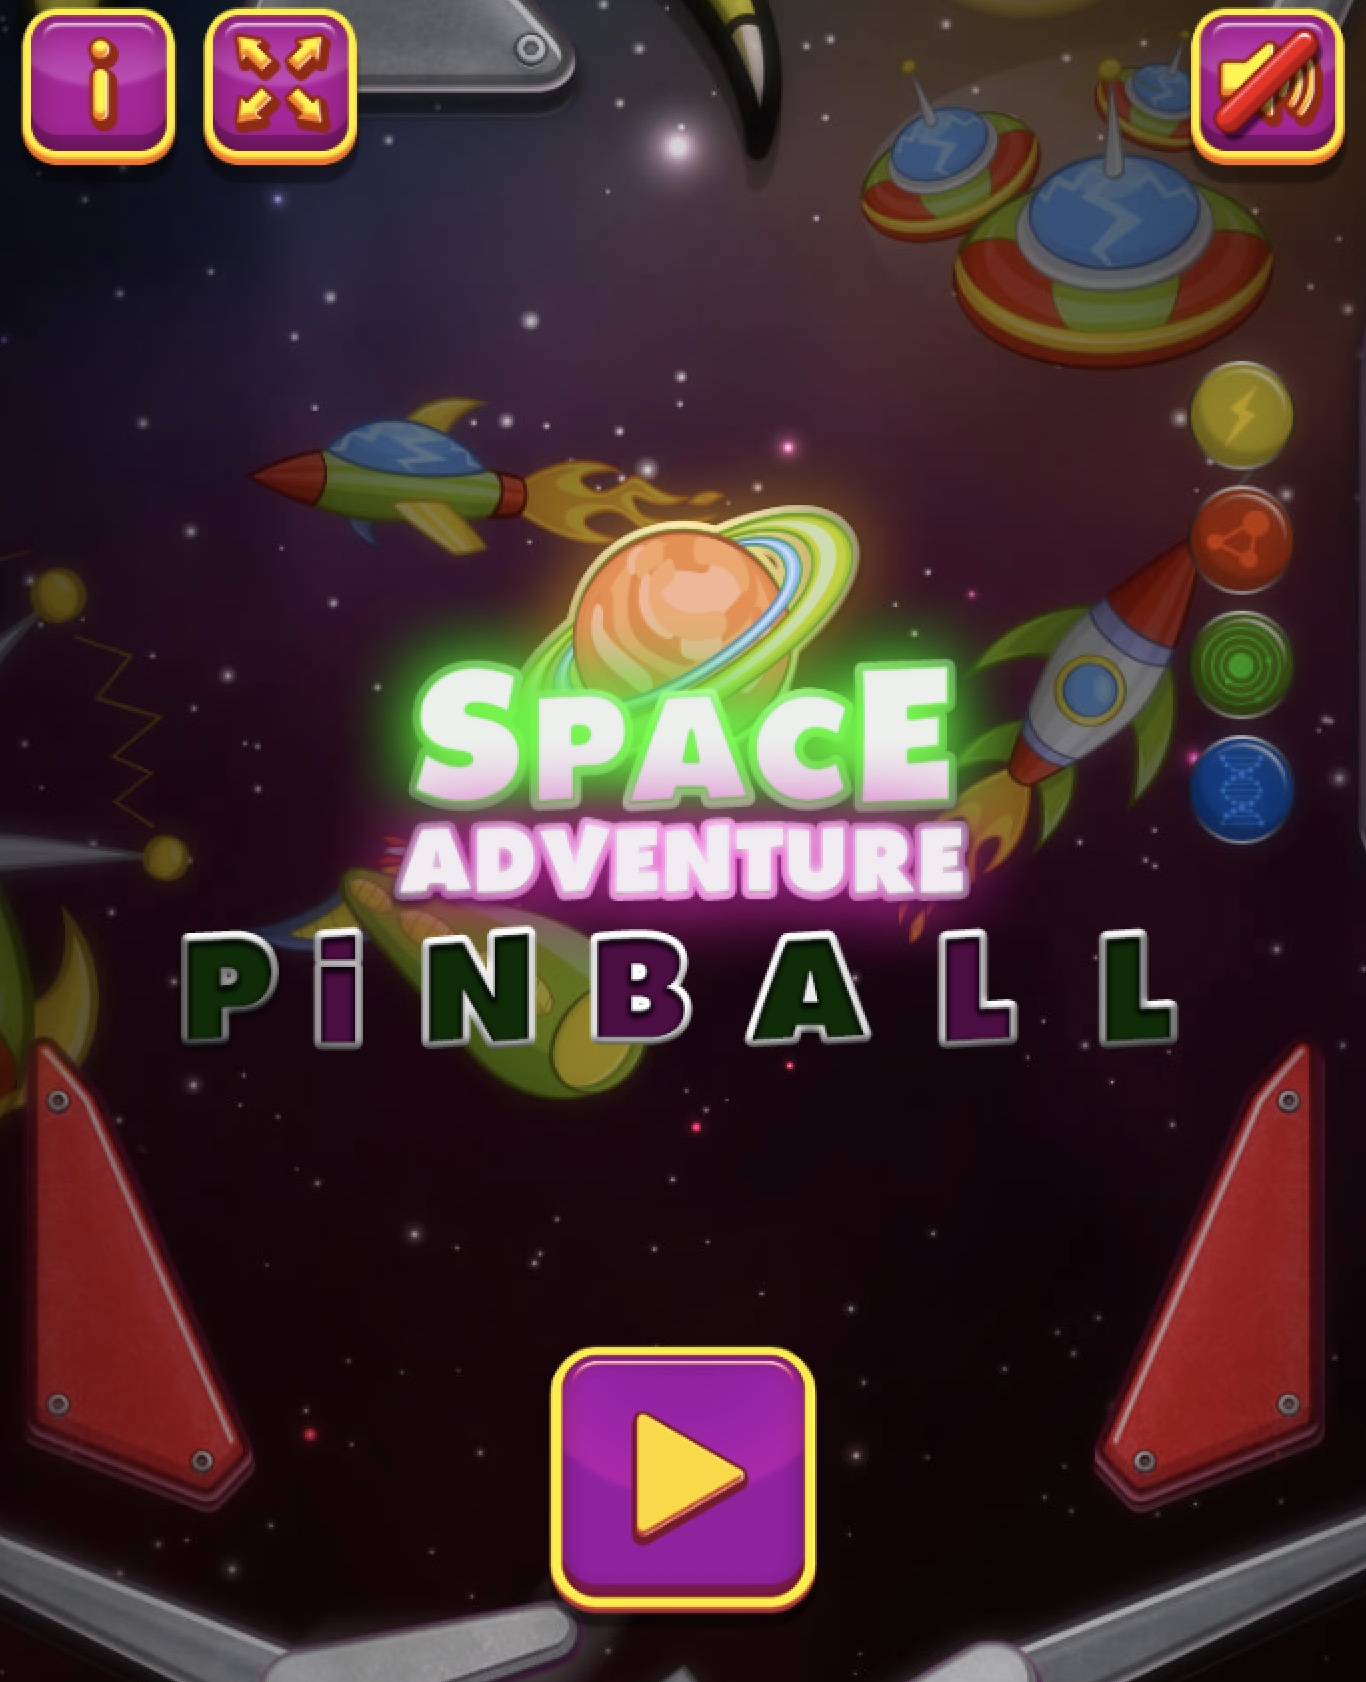 Space Adventure Pinball - Free Online Game